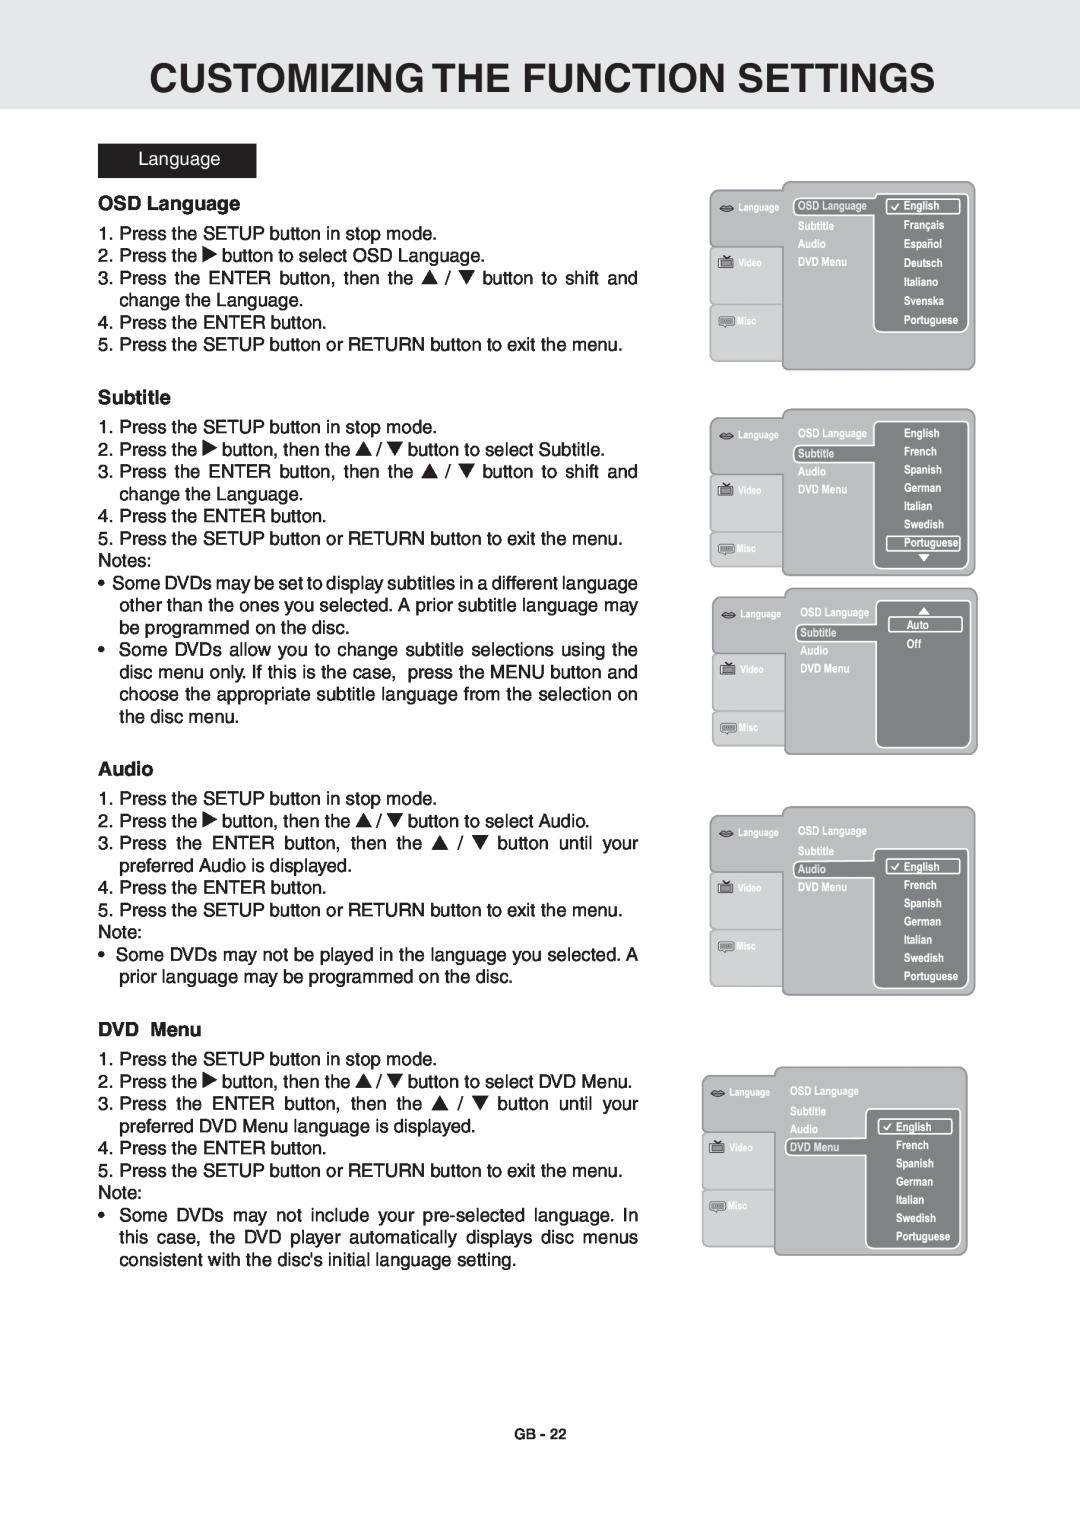 RCA DRC6389T owner manual Customizing The Function Settings, OSD Language, Subtitle, Audio, DVD Menu 